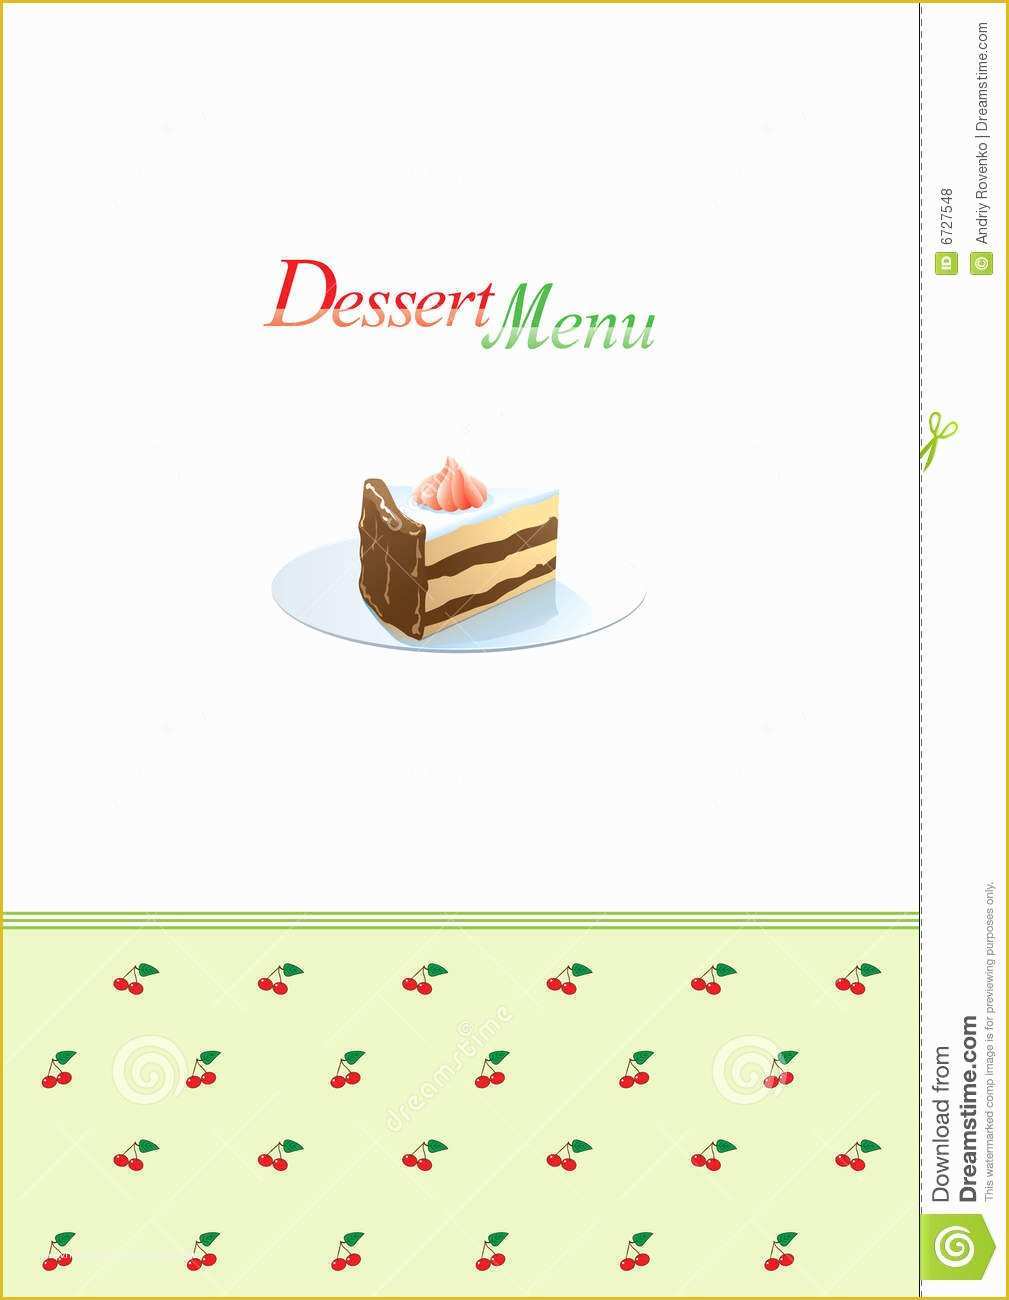 Dessert Menu Template Free Download Of Dessert Menu Template Stock Vector Illustration Of Style